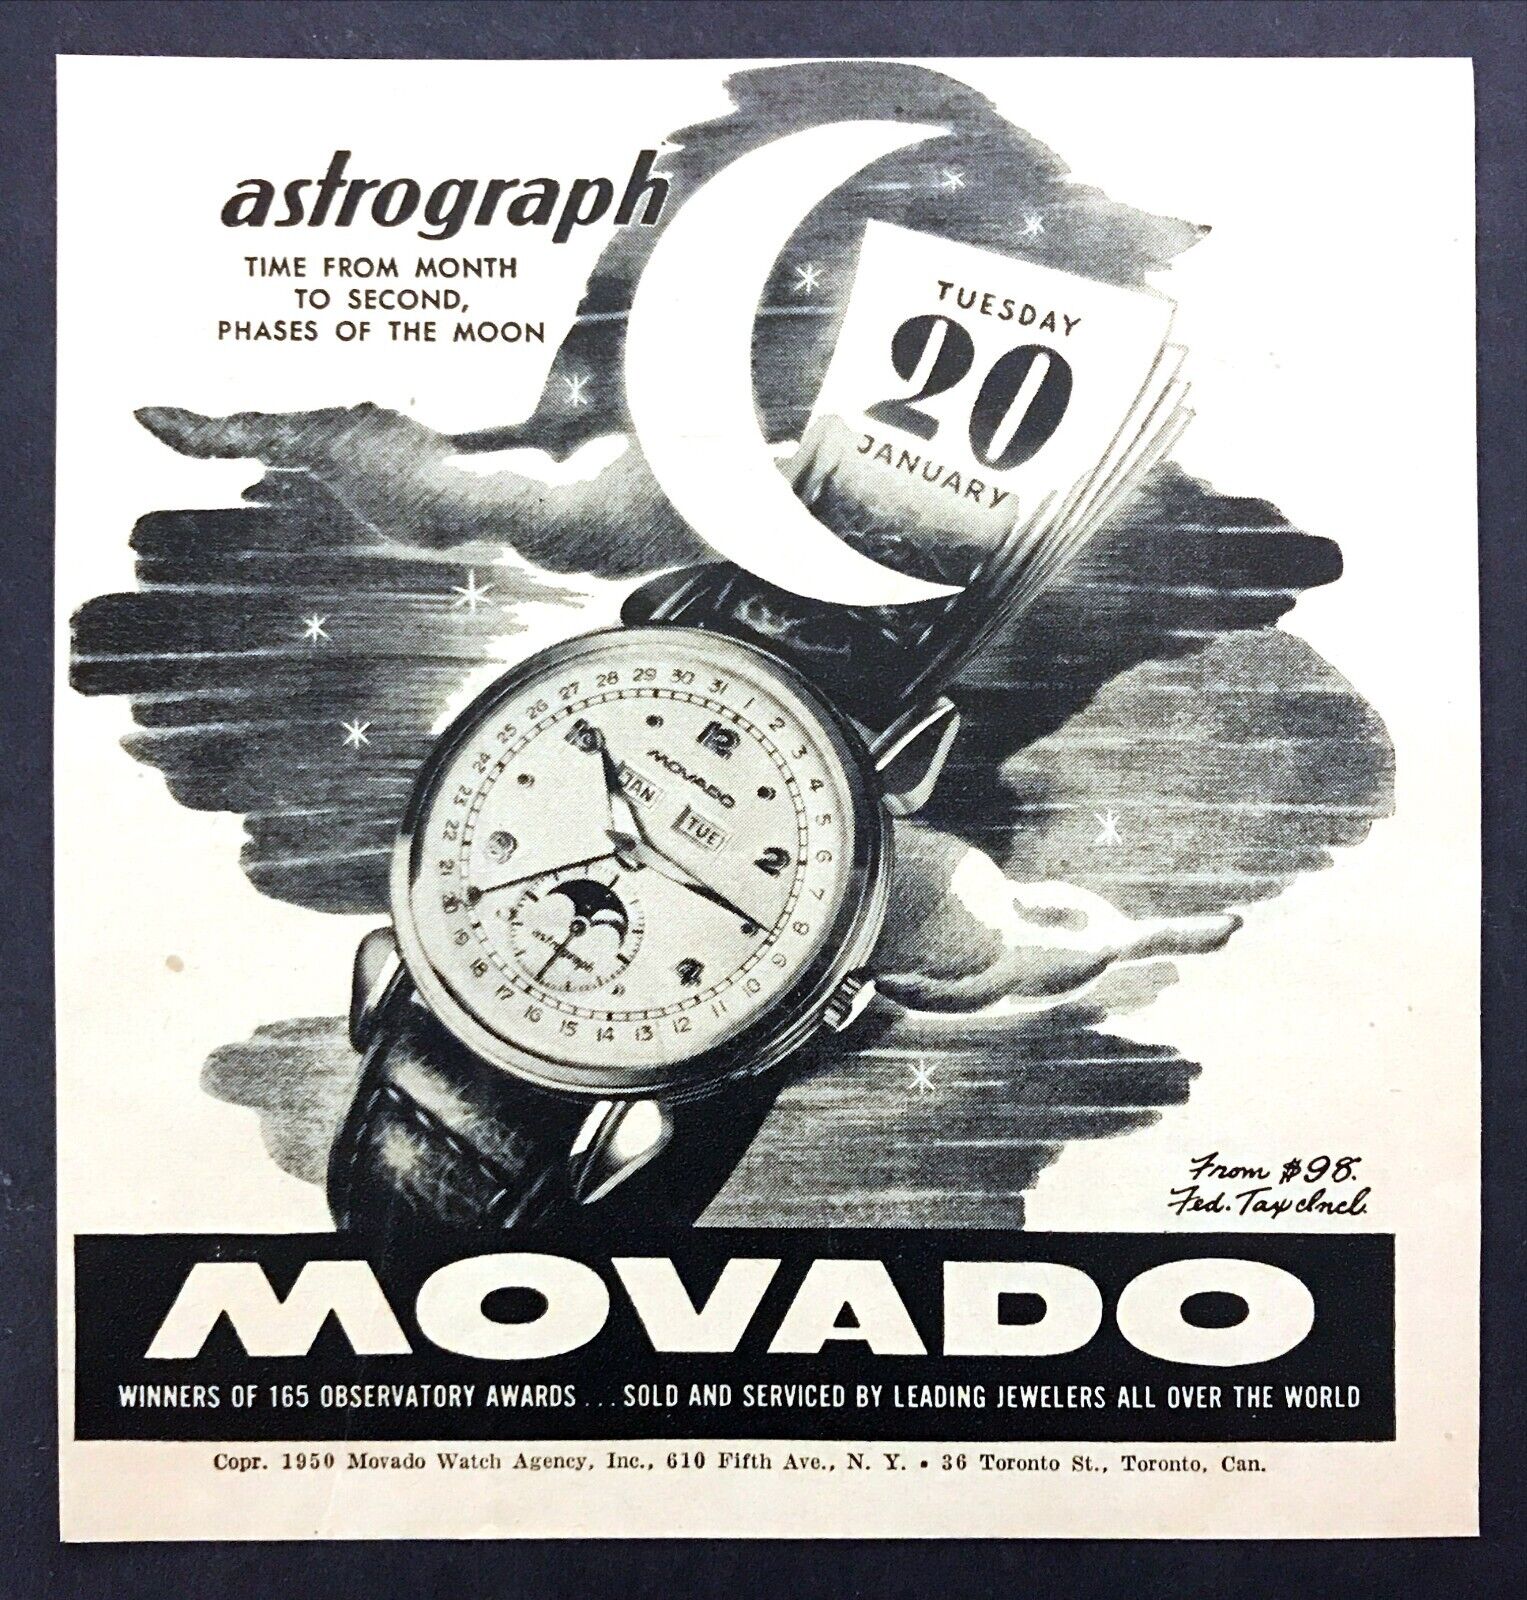 1950 Movado Astrograph Moonphase Calendar Watch photo vintage print ad